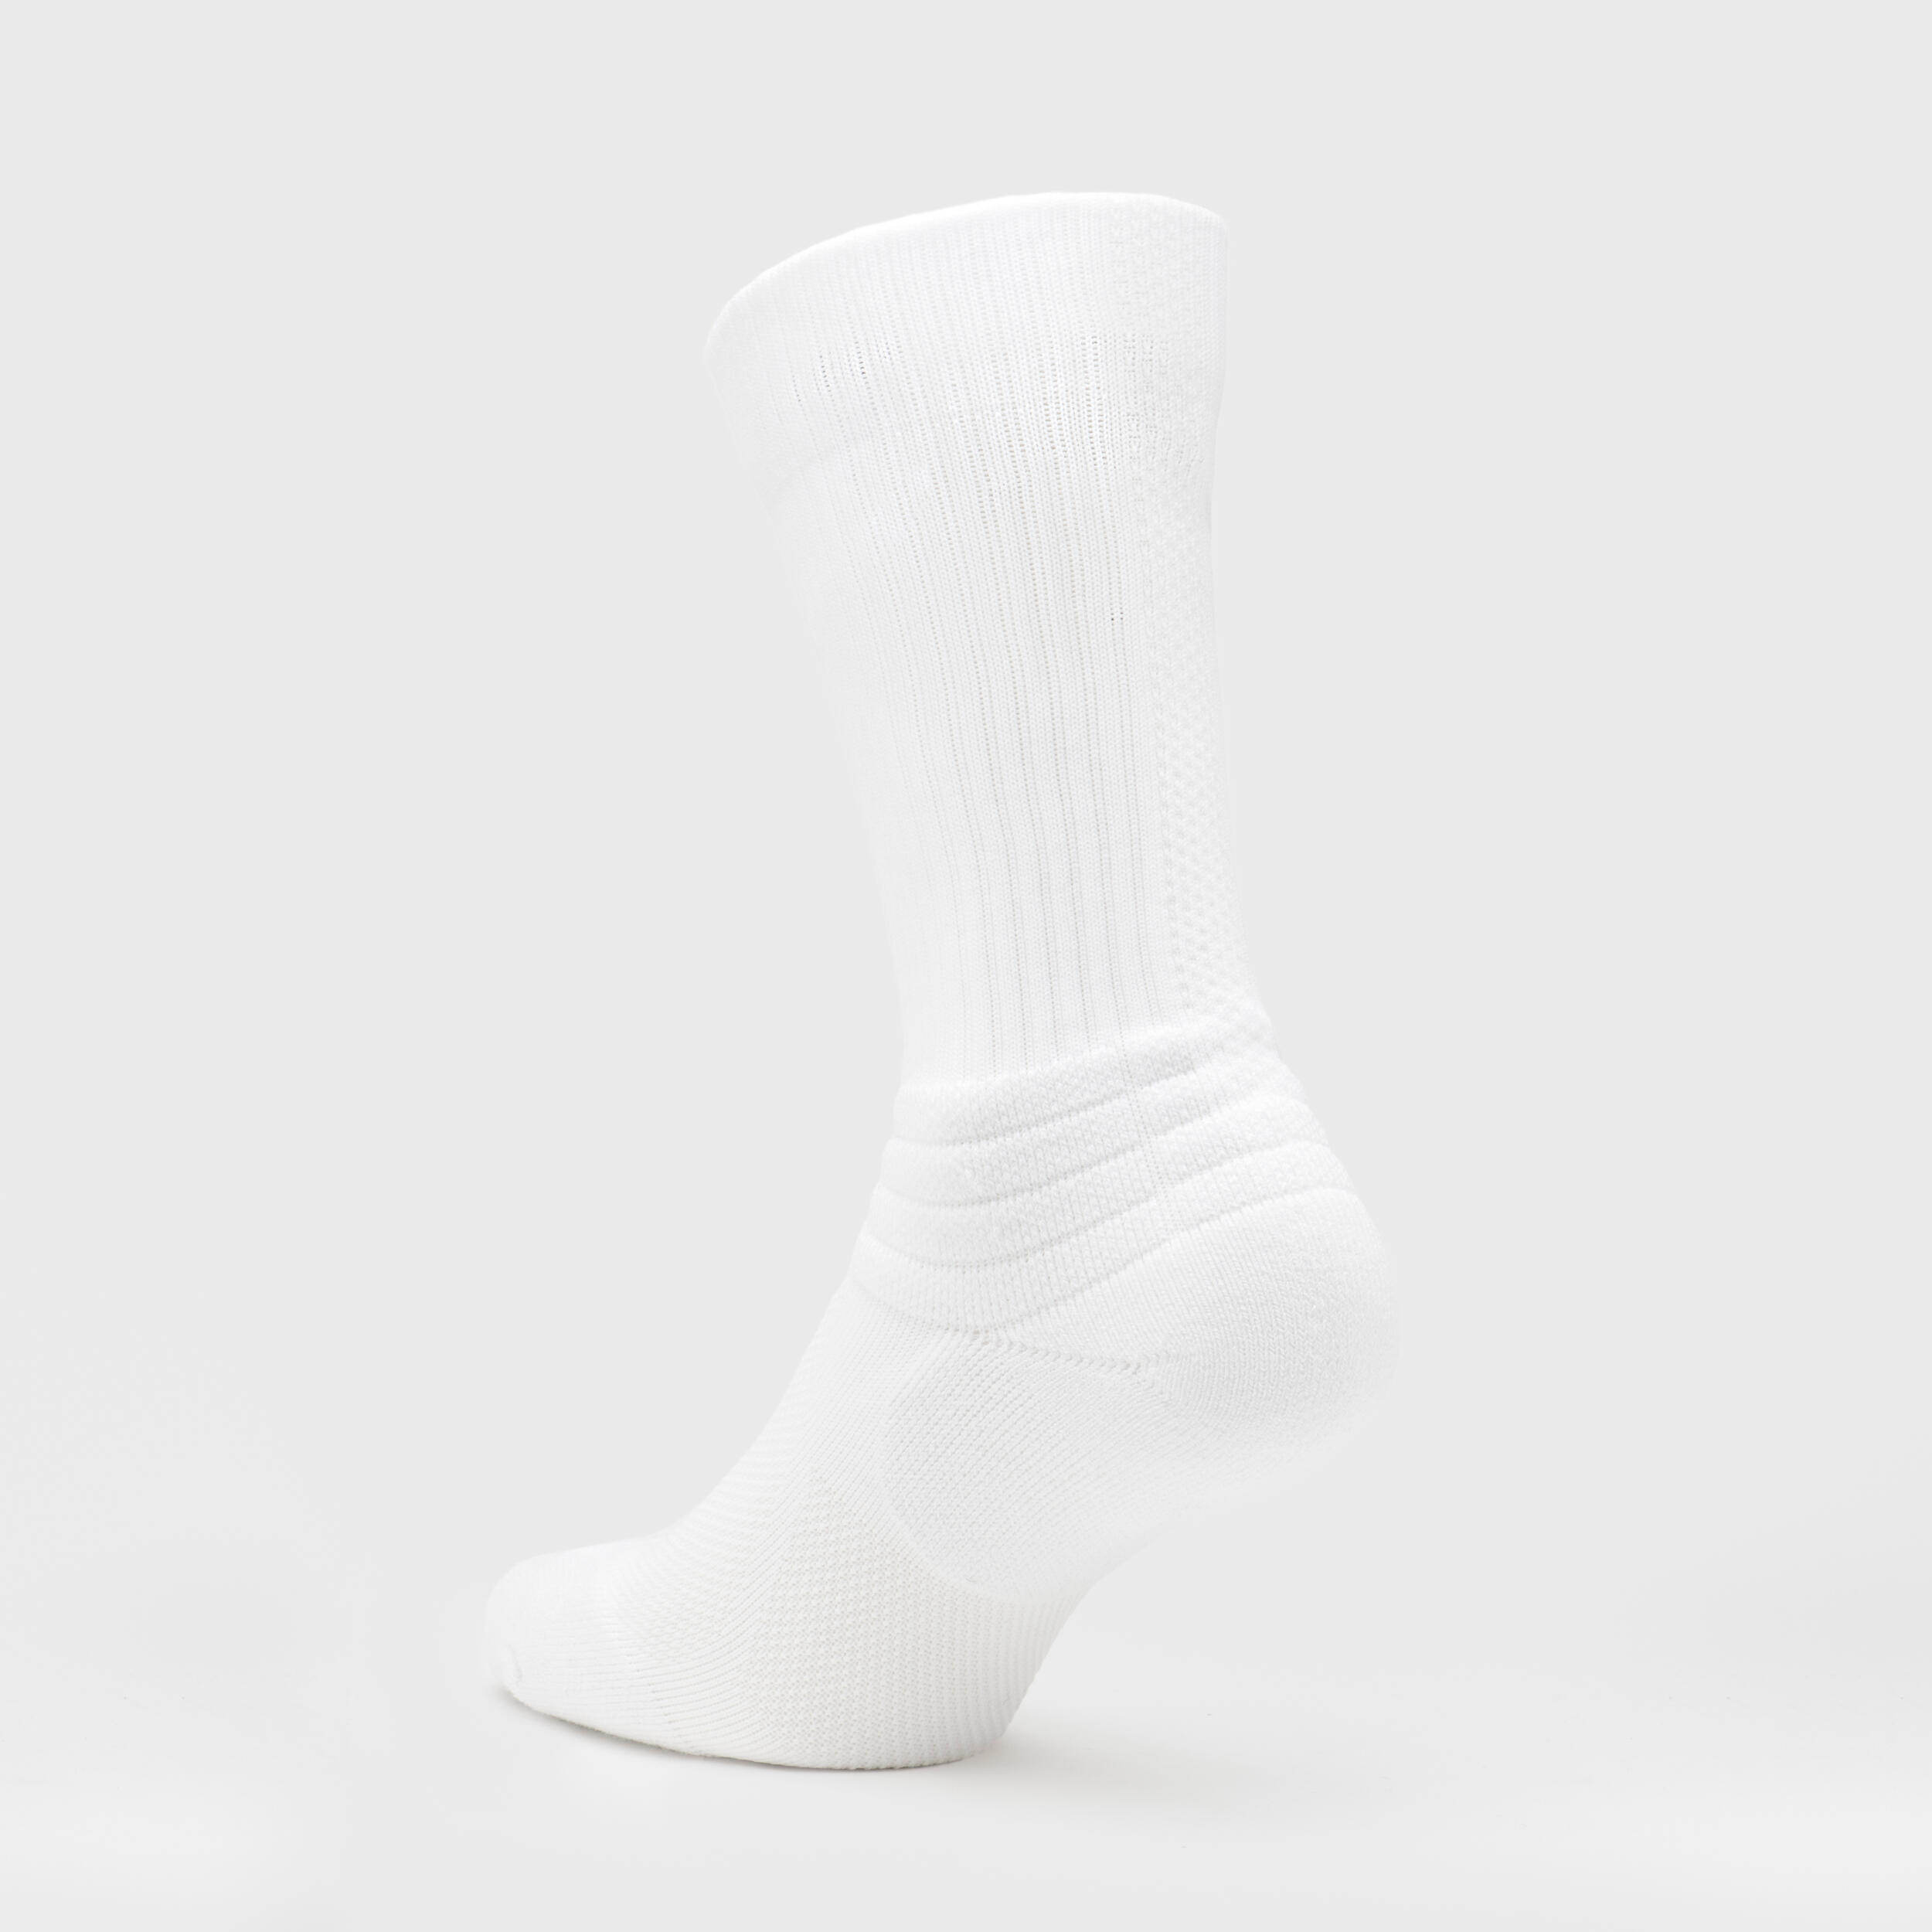 Men's/Women's Low-Rise NBA Basketball Socks SO900 Twin-Pack - White 4/6